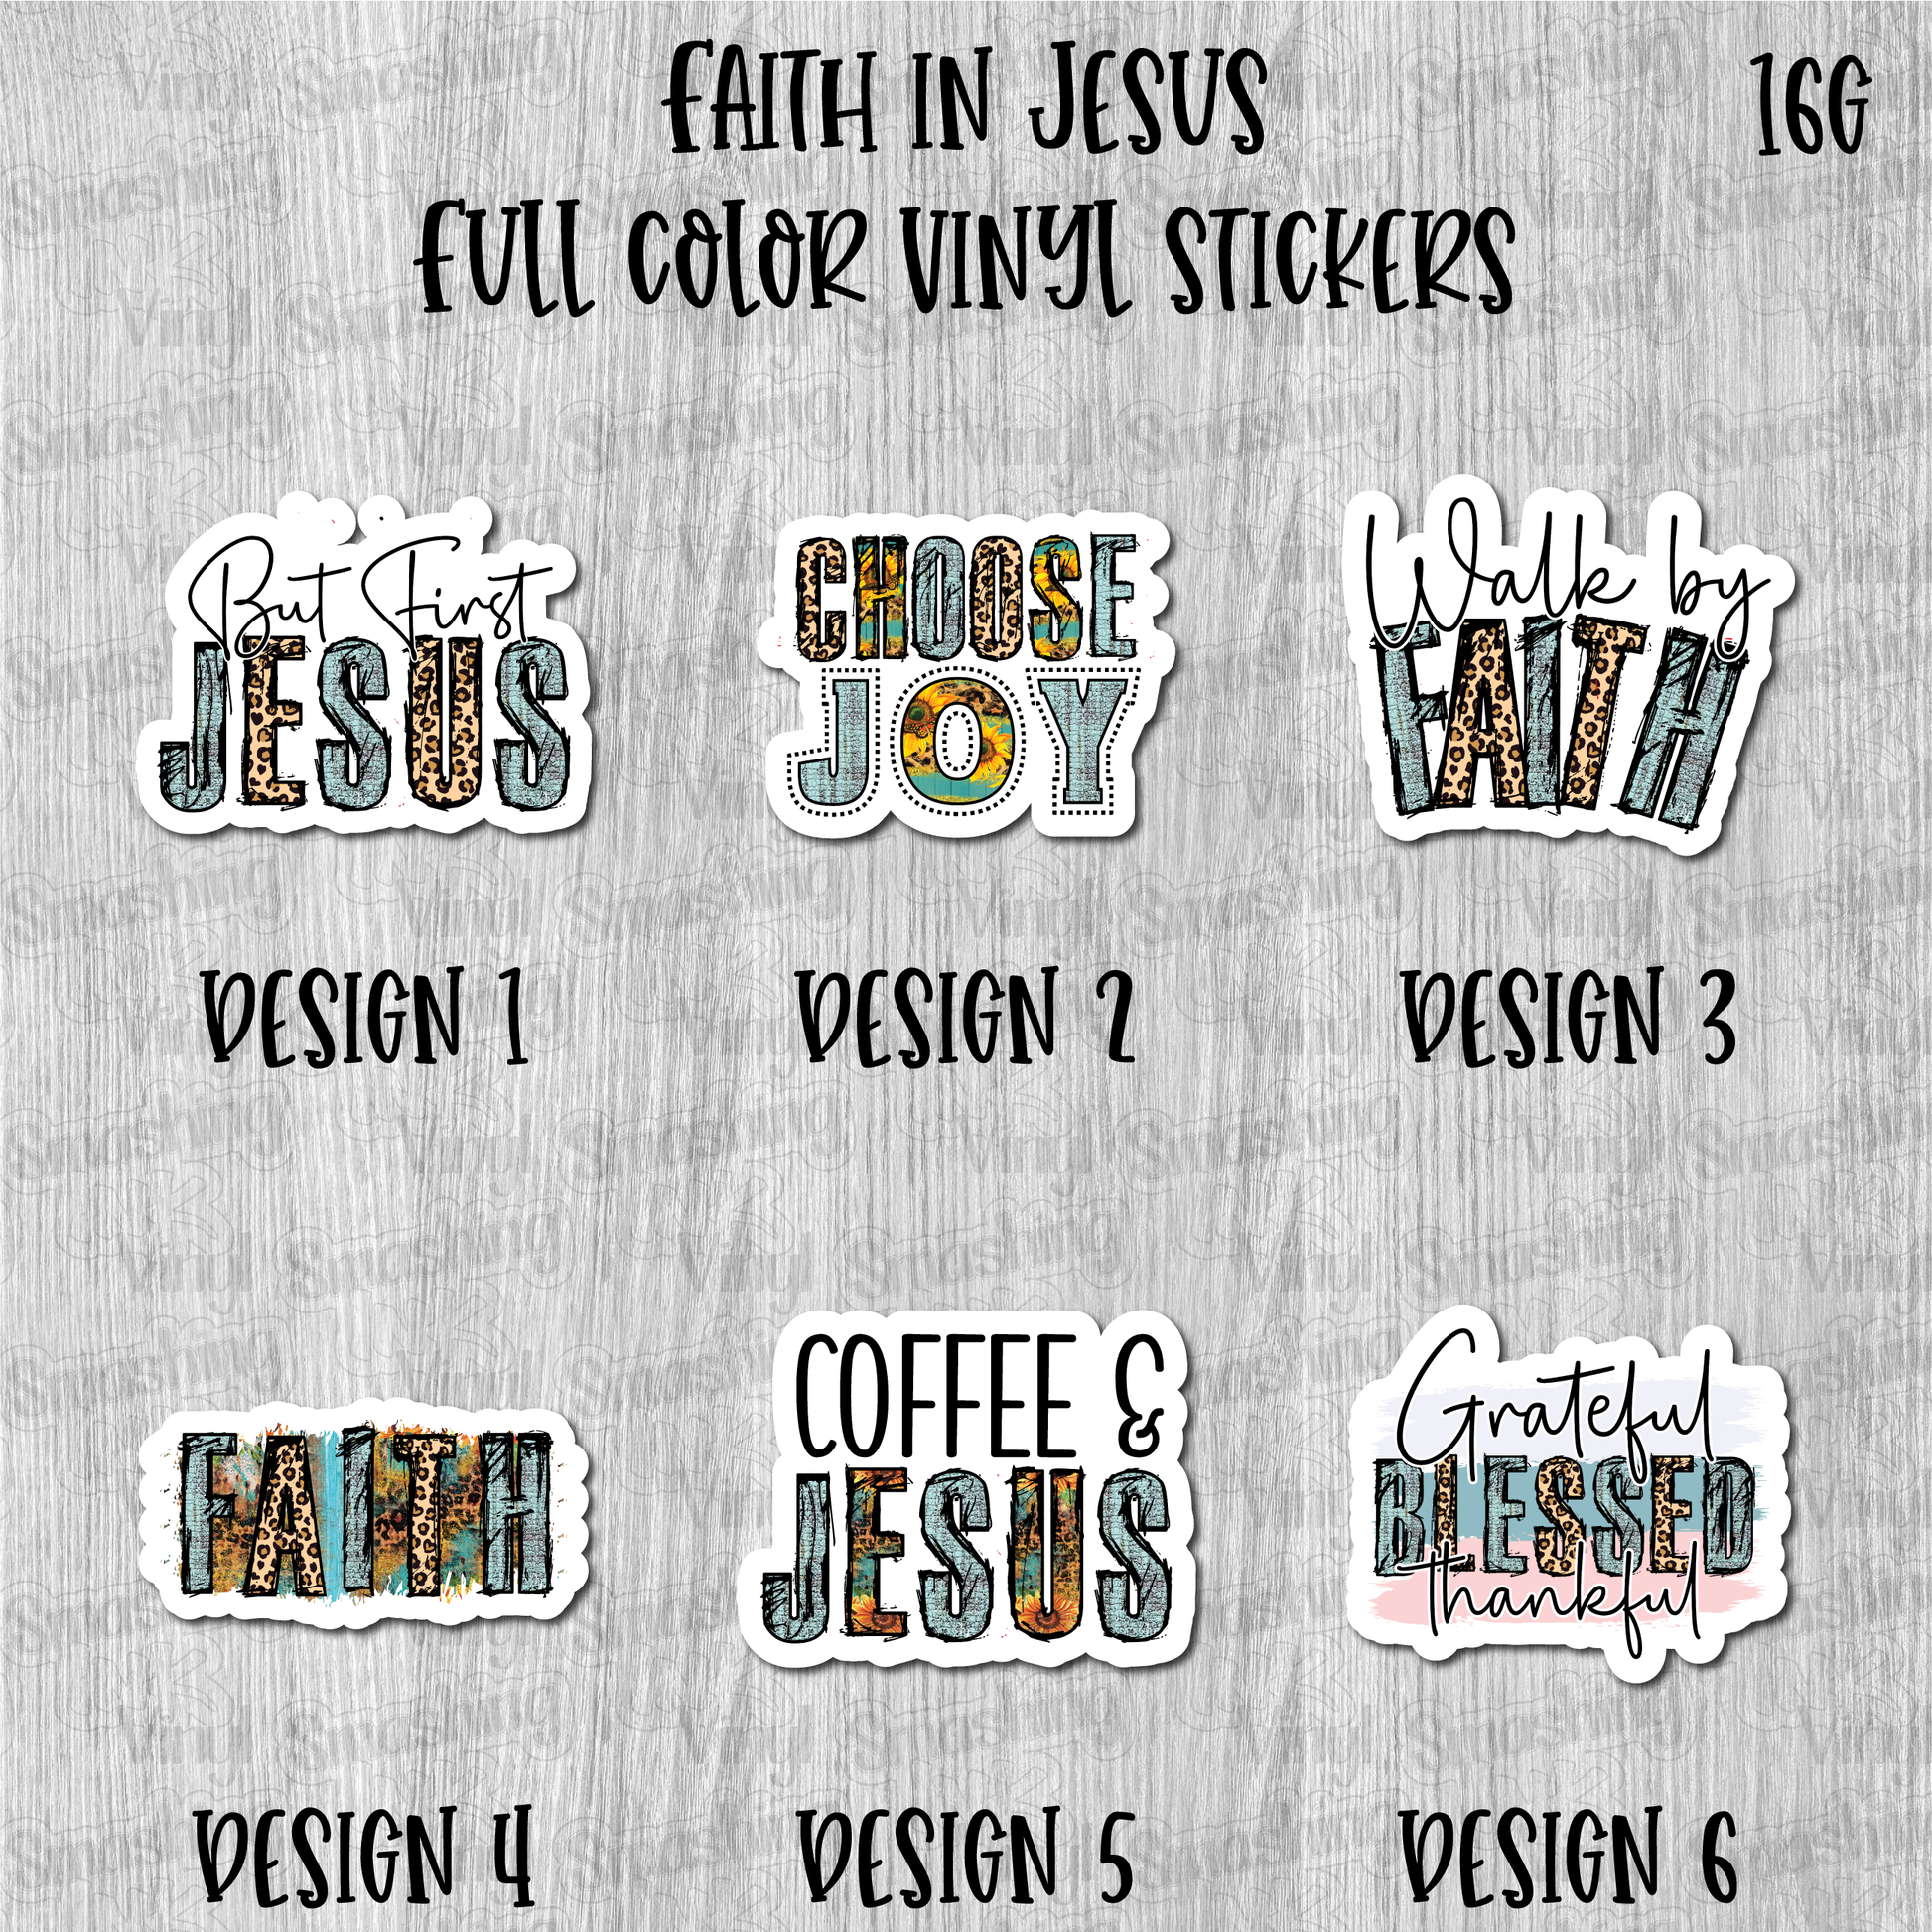 Jesus Christian Stickers Wholesale sticker supplier - Wholesale